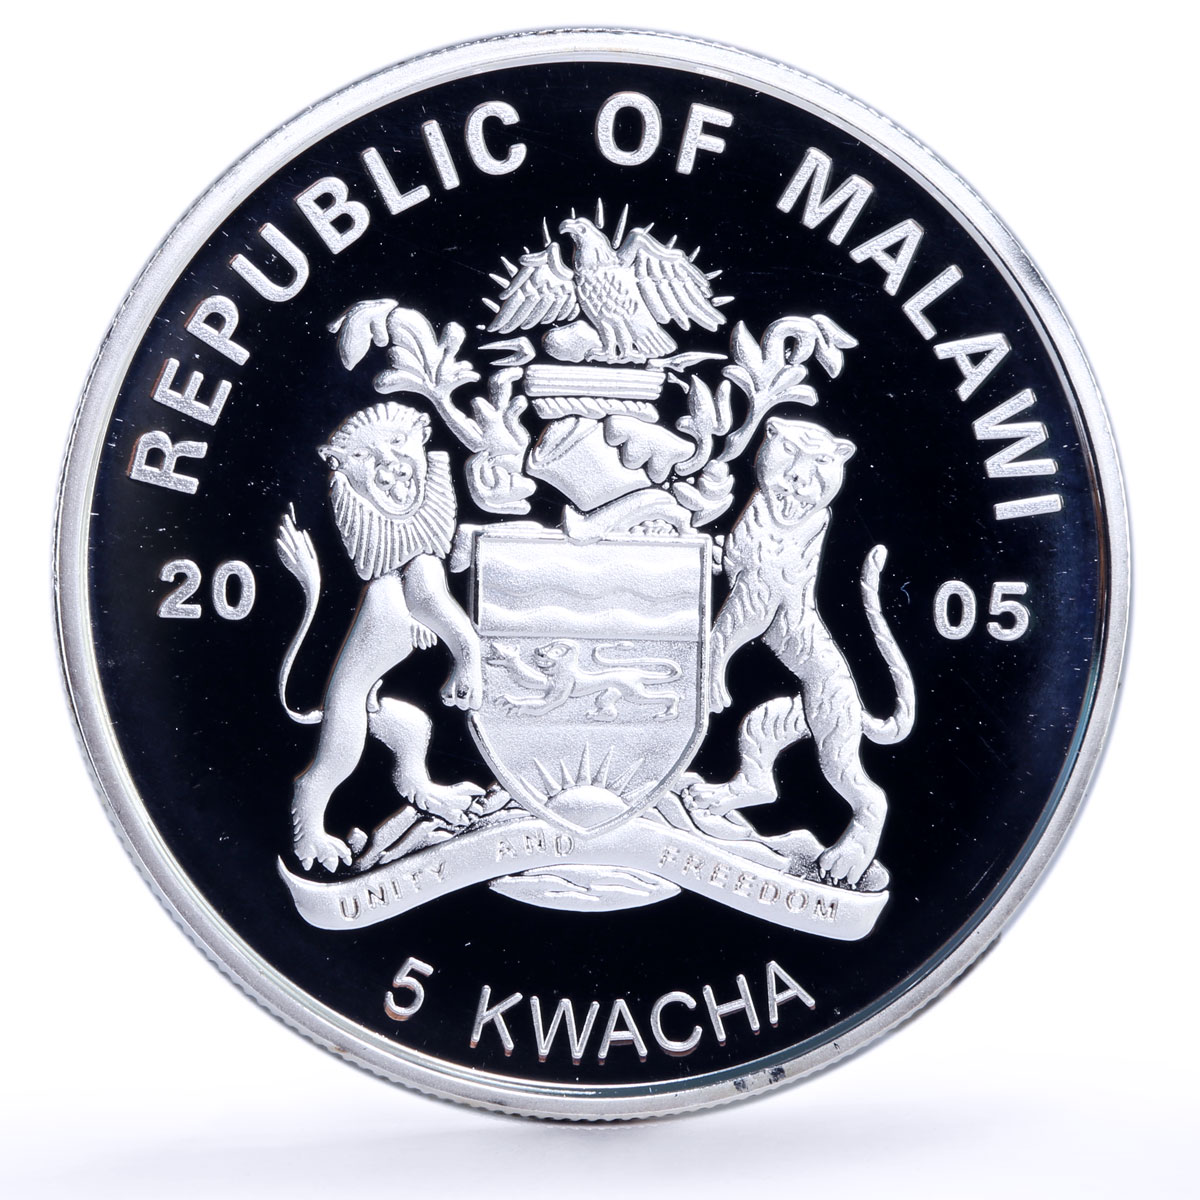 Malawi 5 kwacha Papal Visit John Paul II Ship Clipper proof silver coin 2005